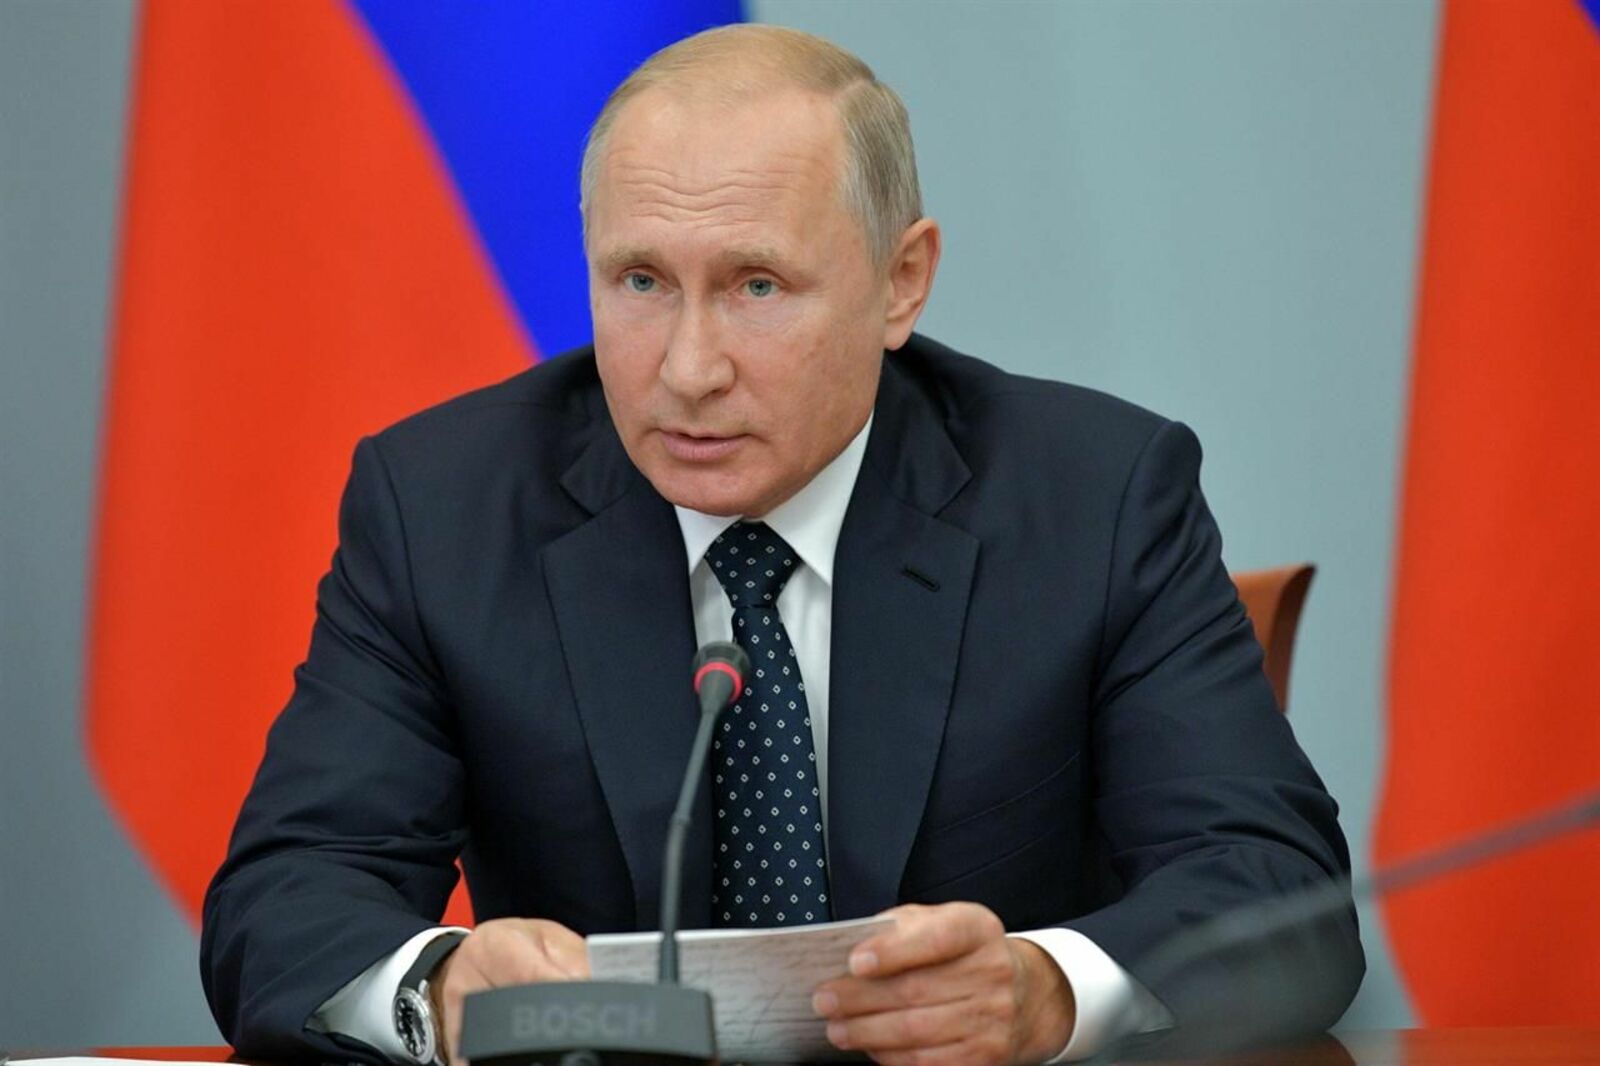 Риски влияния санкций на экономику могут возрасти, заявил Путин